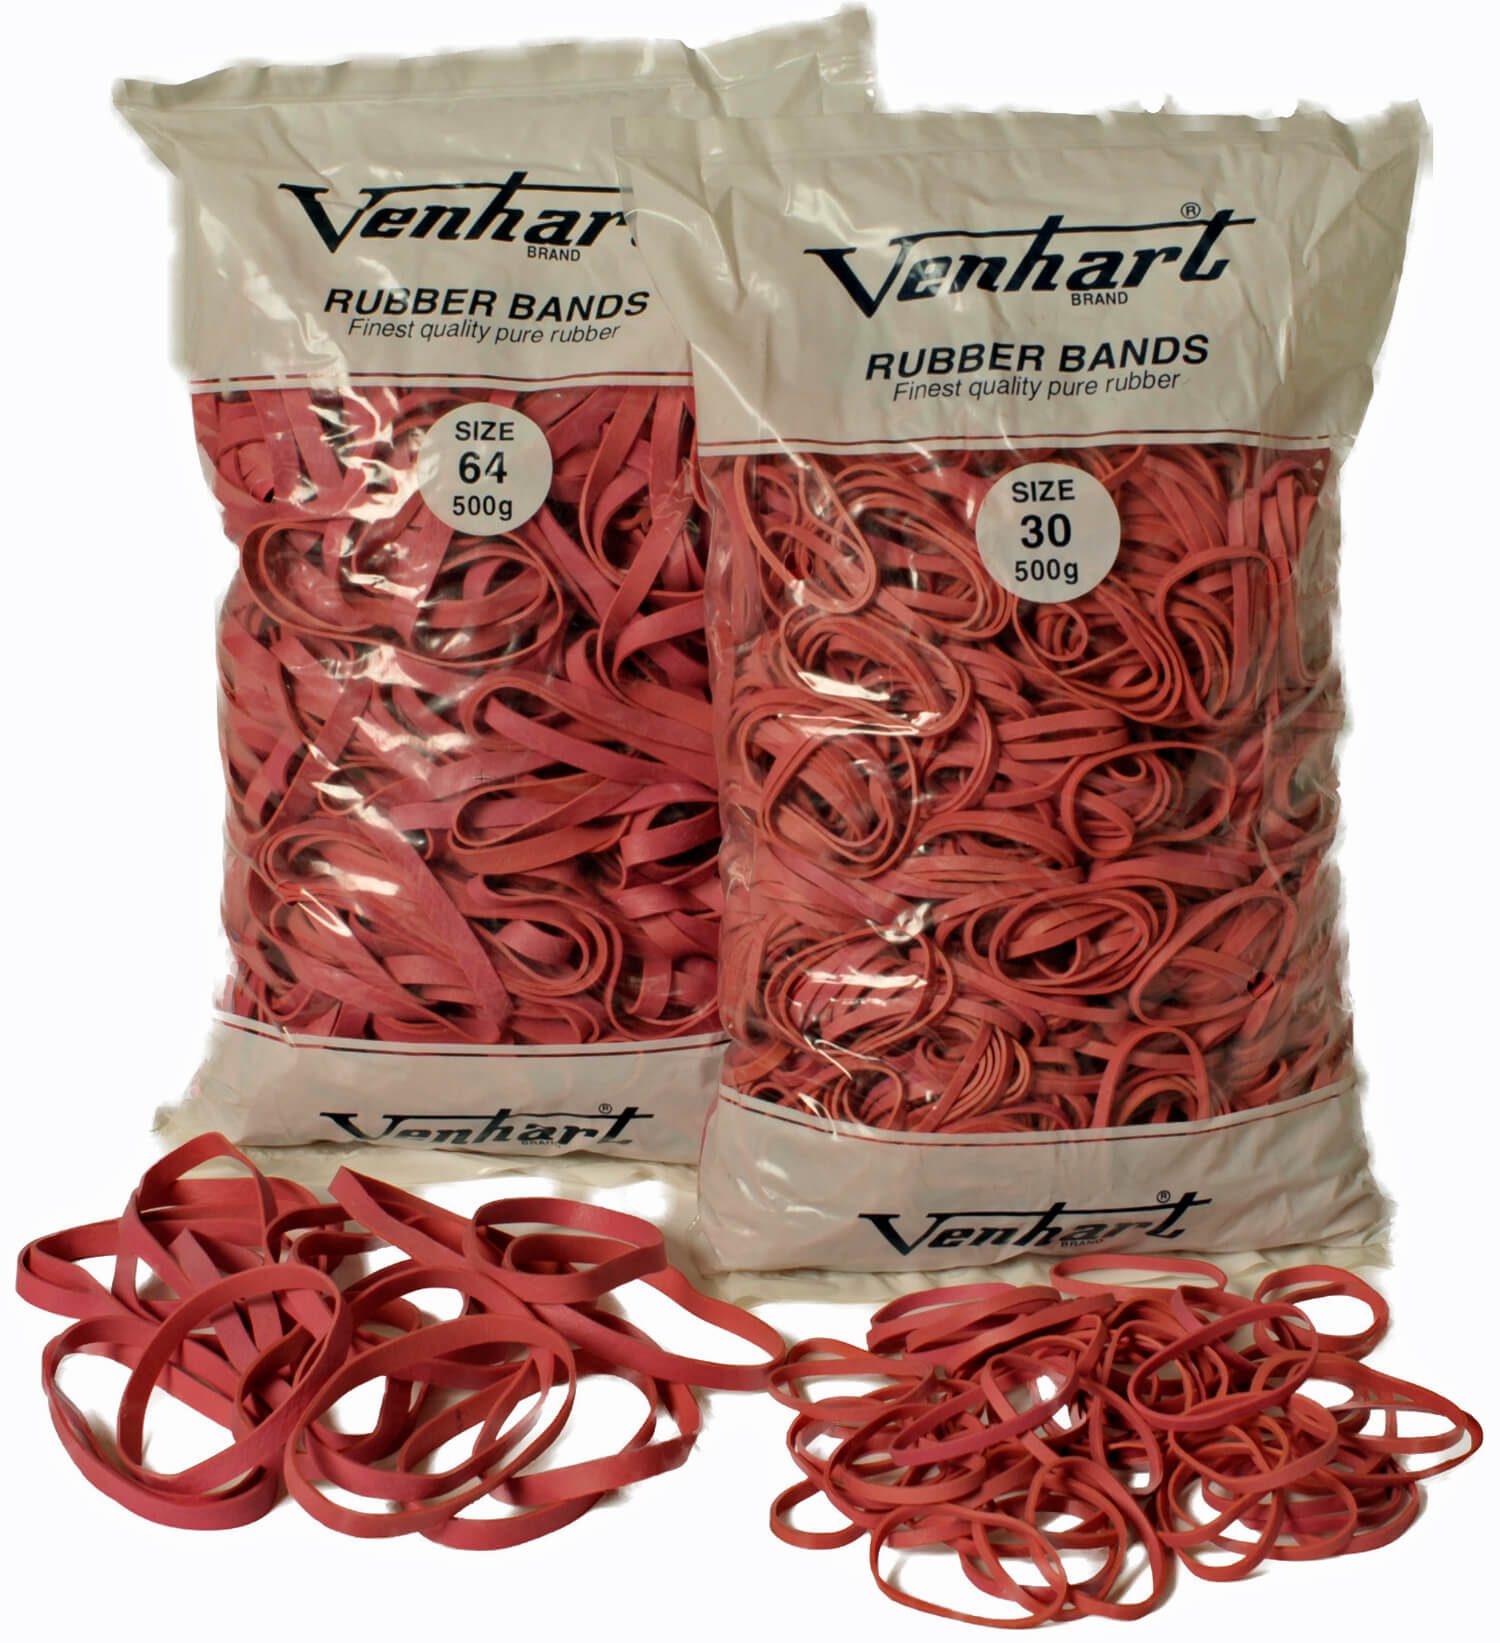 branded rubber bands